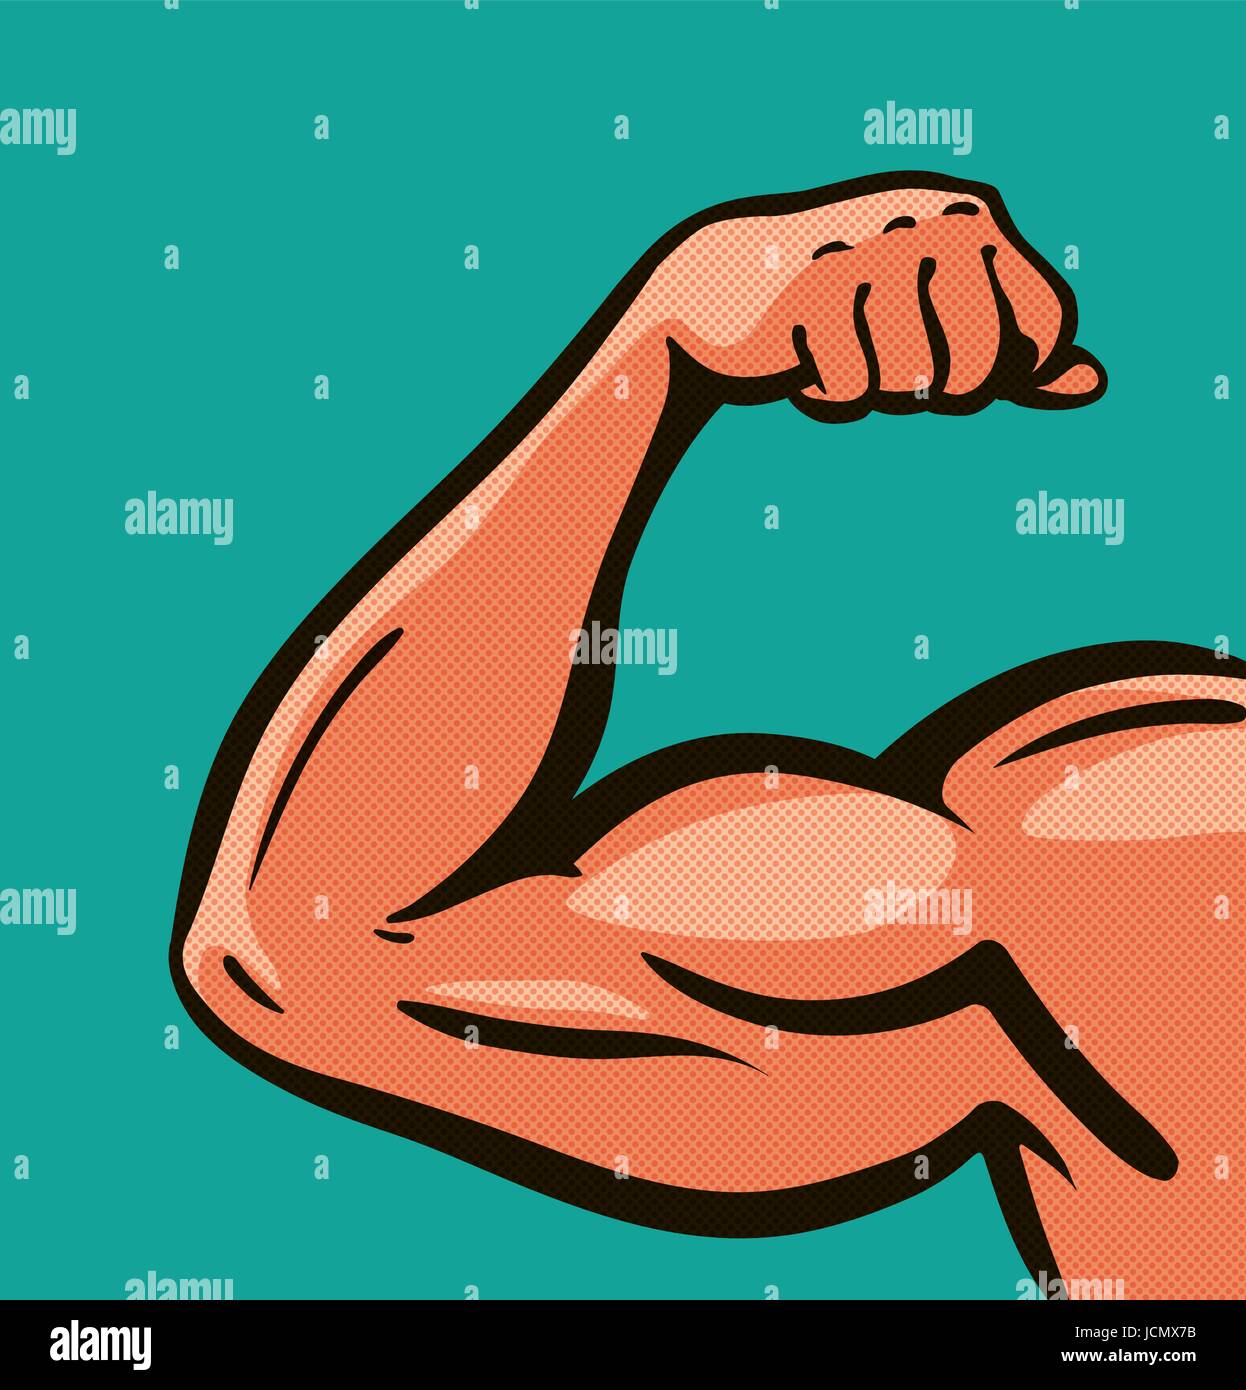 https://c8.alamy.com/comp/JCMX7B/strong-arm-muscles-gym-comics-style-design-vector-illustration-JCMX7B.jpg